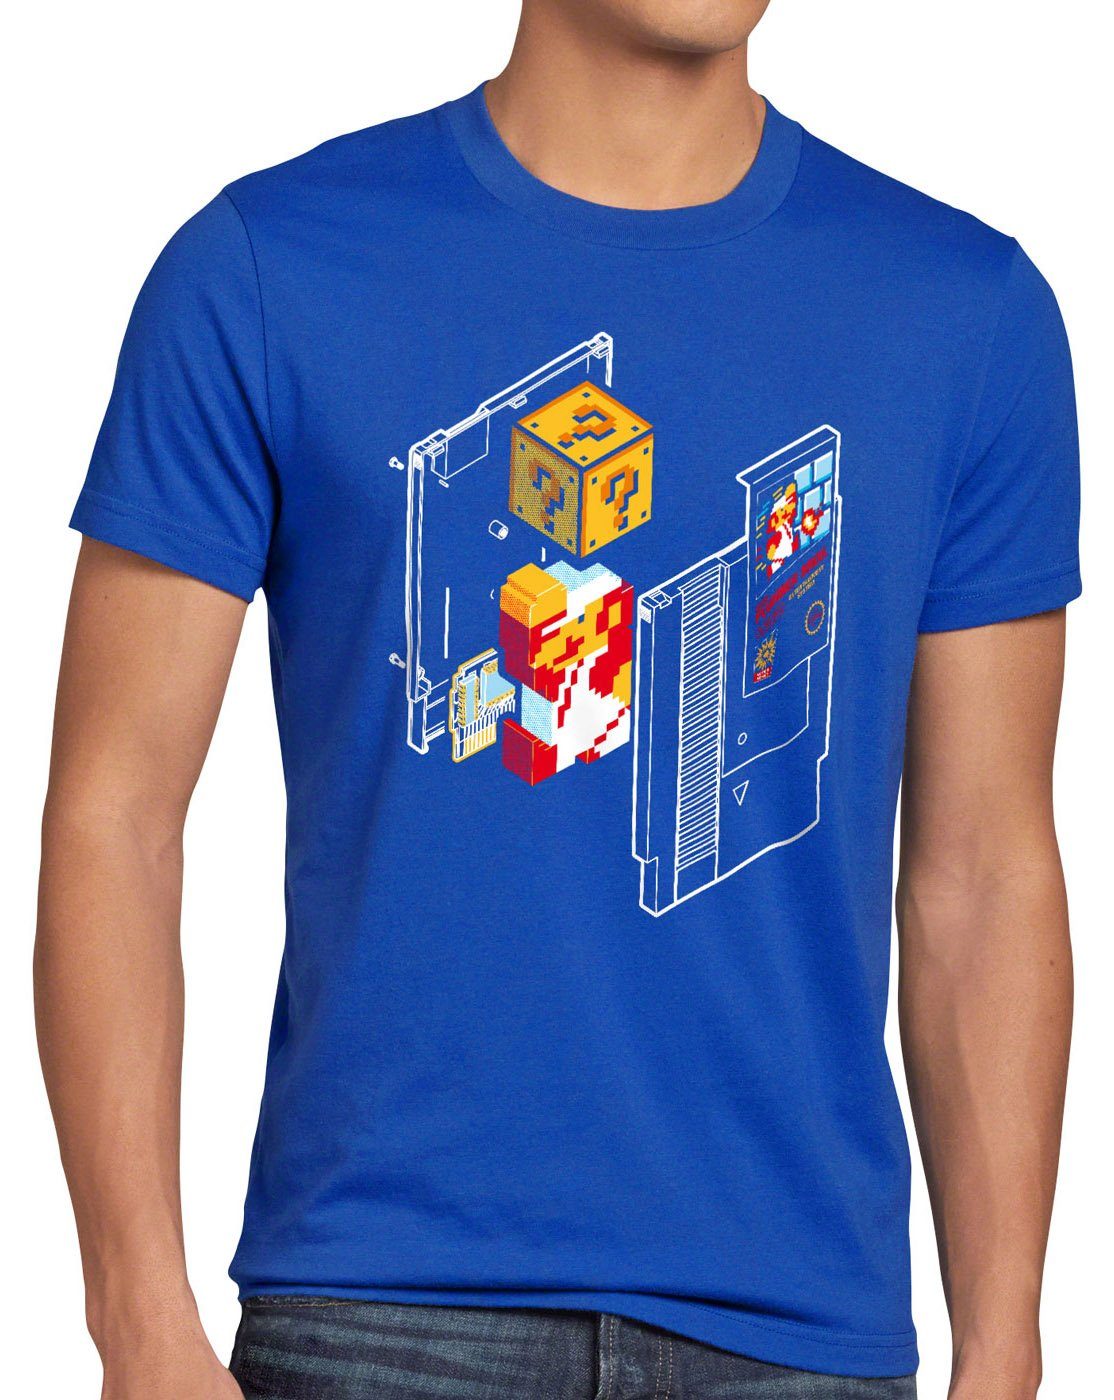 Plumber style3 blau 8-Bit snes T-Shirt mini classic gamer Print-Shirt nes retro Herren classic Bros